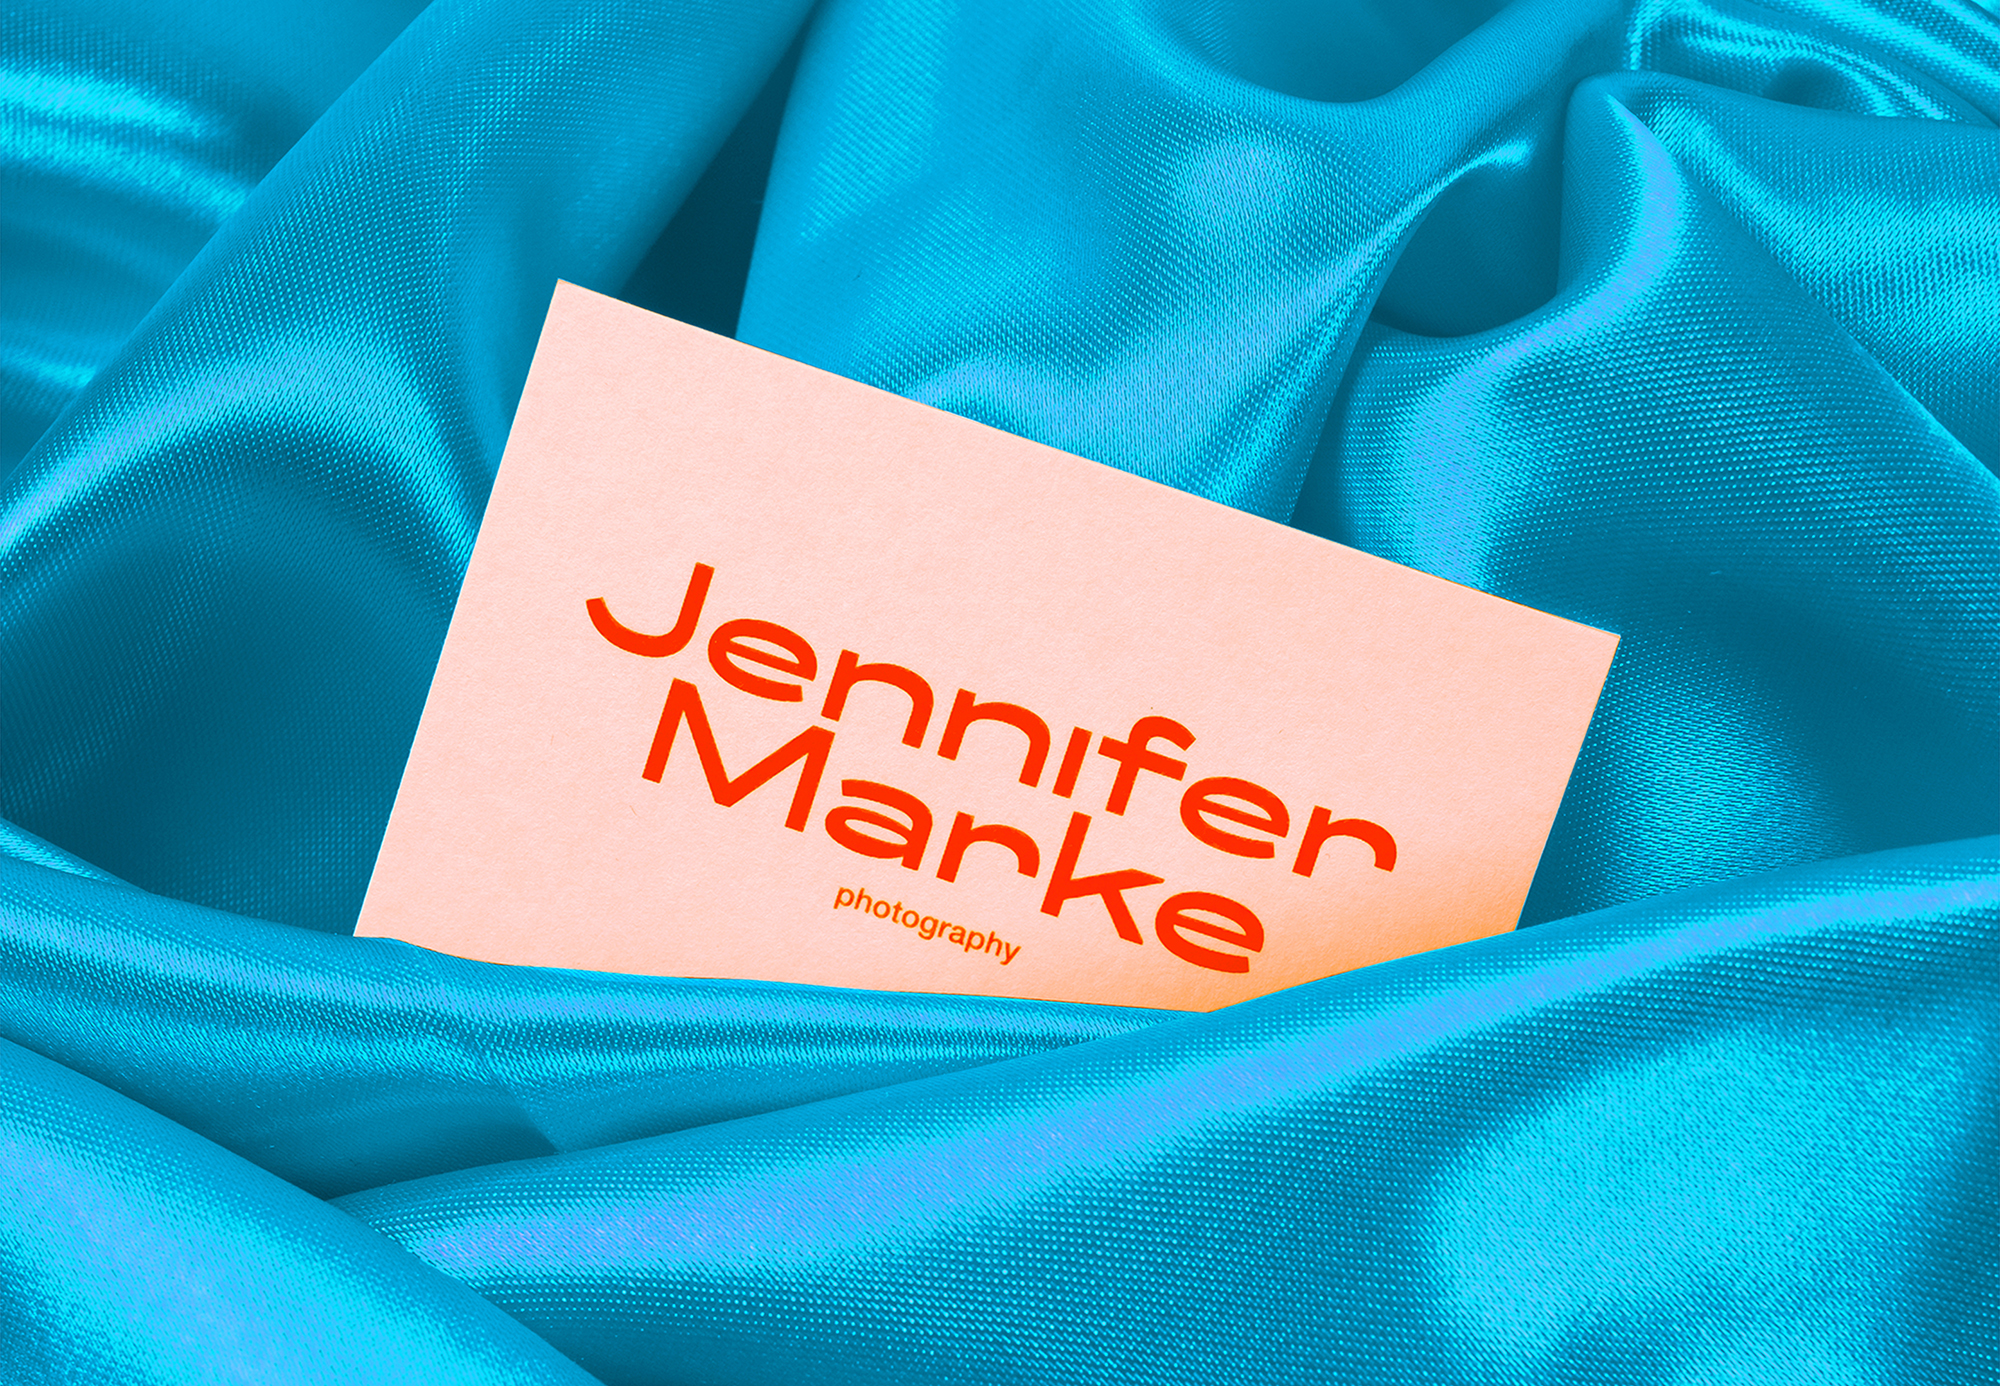 Jennifer Marke Photograph Branddesign